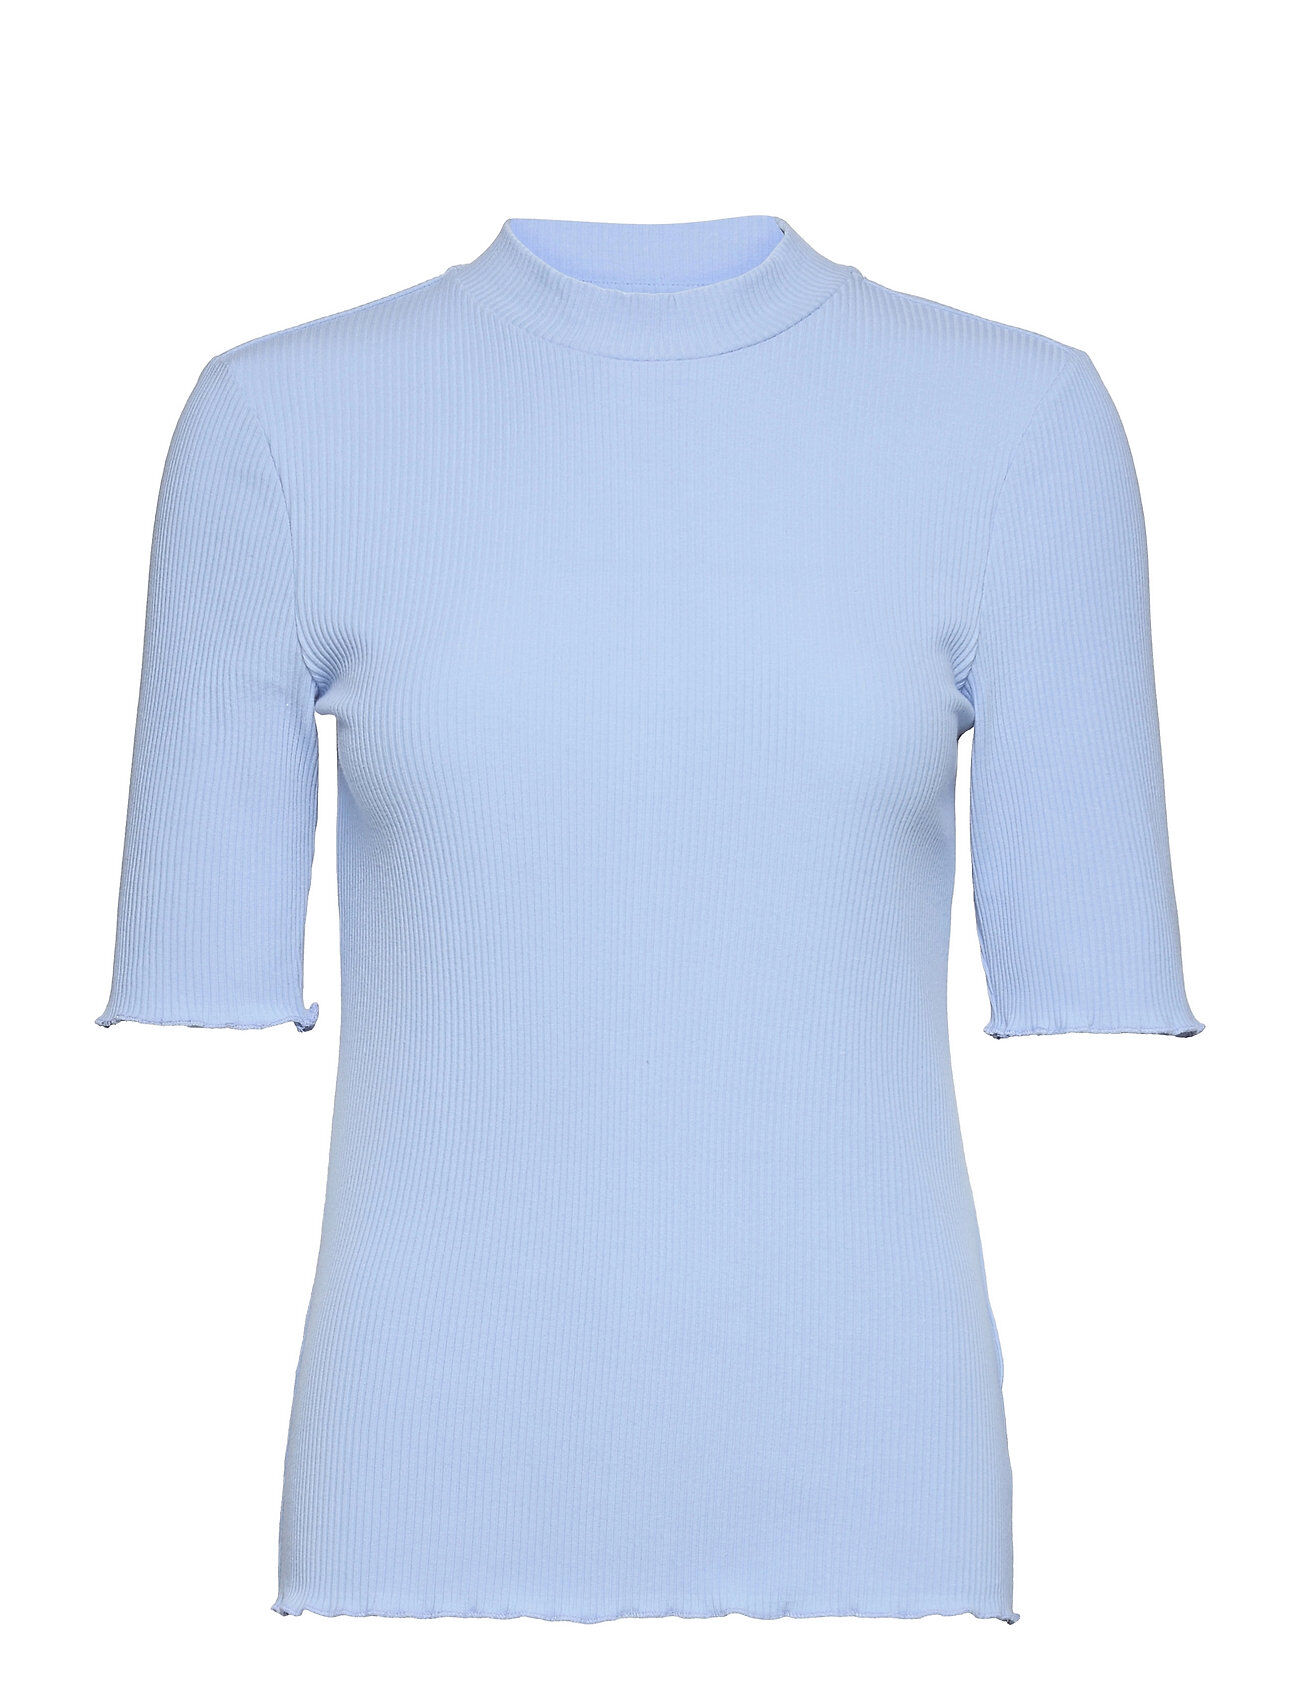 Selected Femme Slfanna 2/4 Crew Neck Tee T-shirts & Tops Short-sleeved Blå Selected Femme